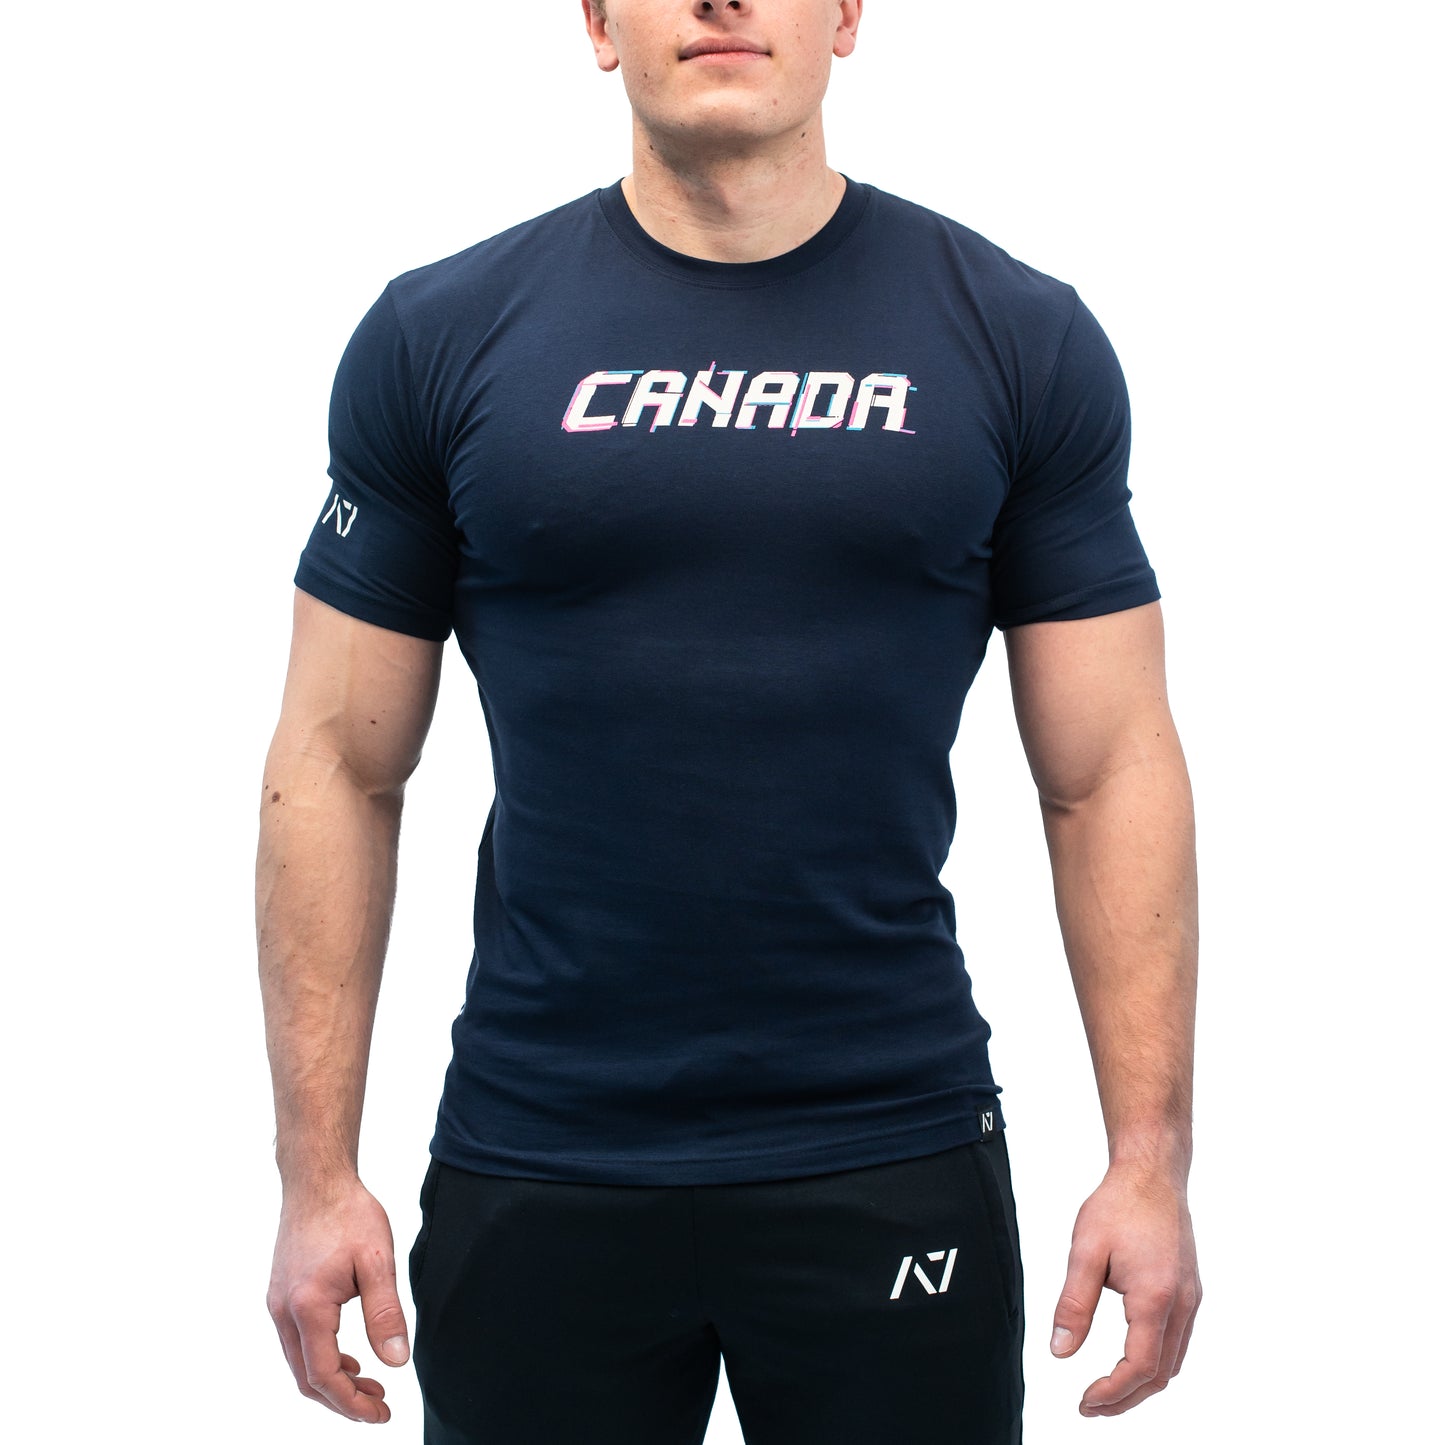 
                  
                    Canada Reloaded Bar Grip Men's Shirt
                  
                